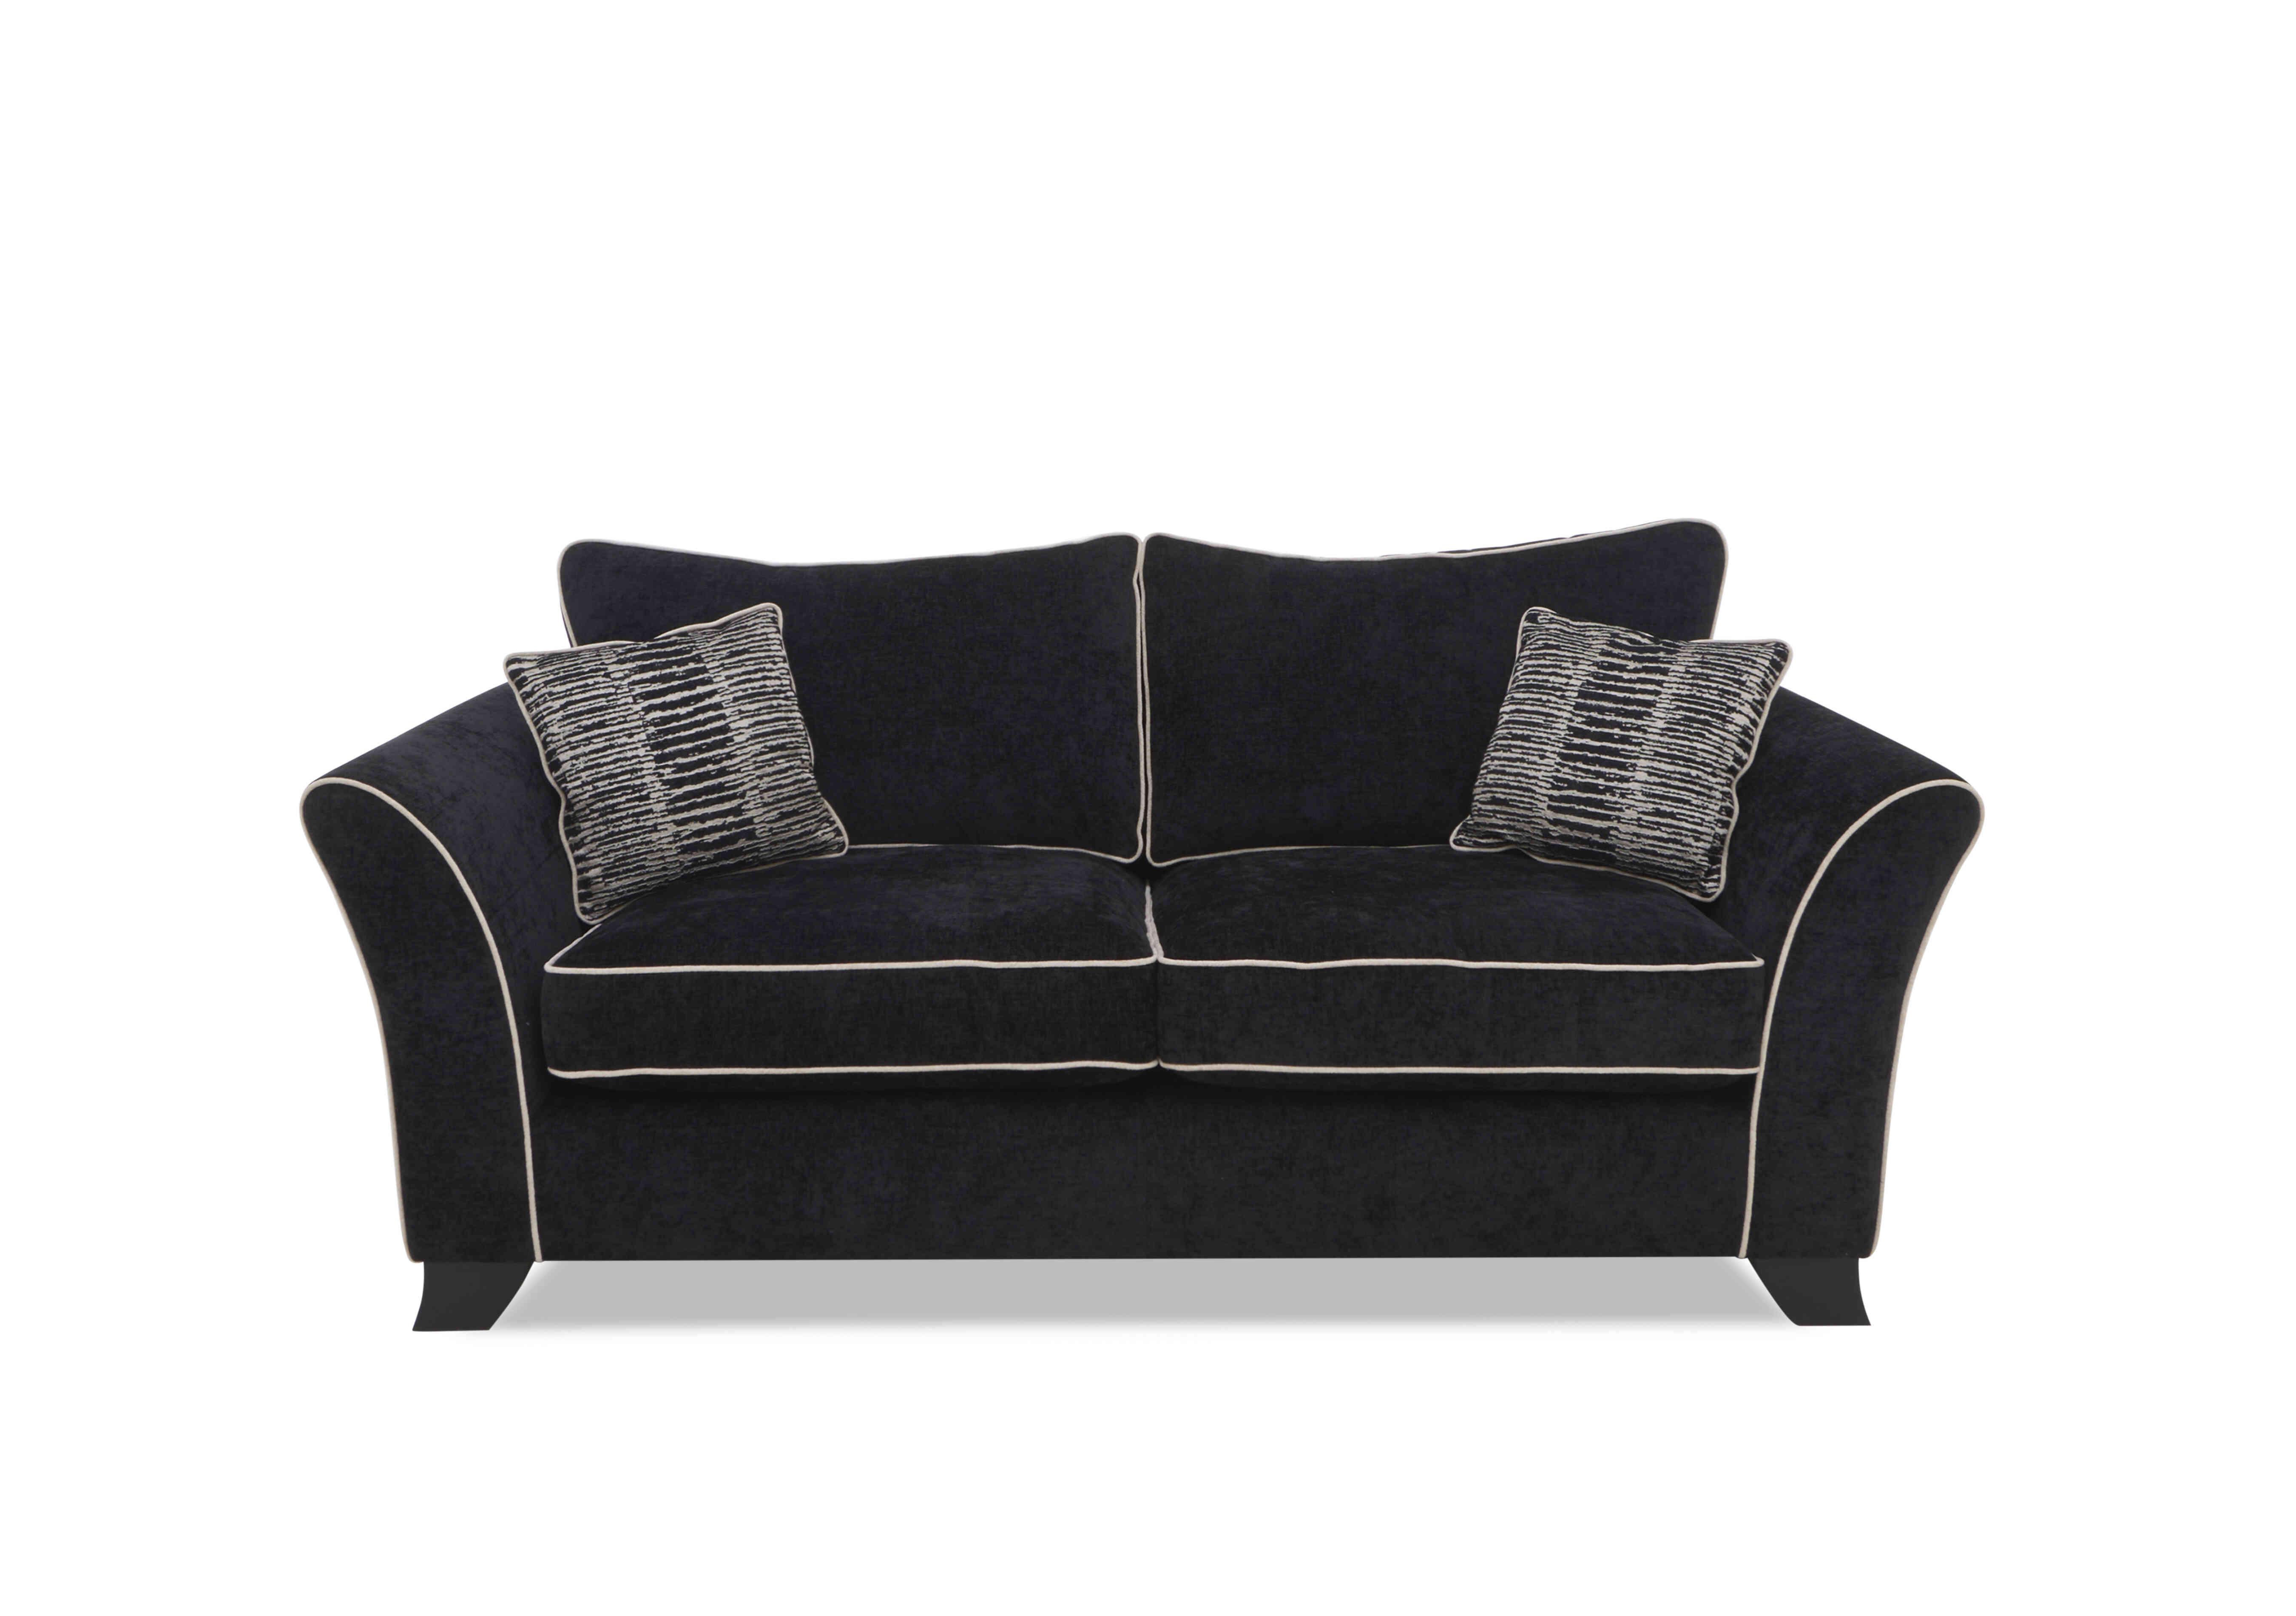 Stellar 3 Seater Classic Back Sofa Bed in Bolero Ebony Contrast on Furniture Village